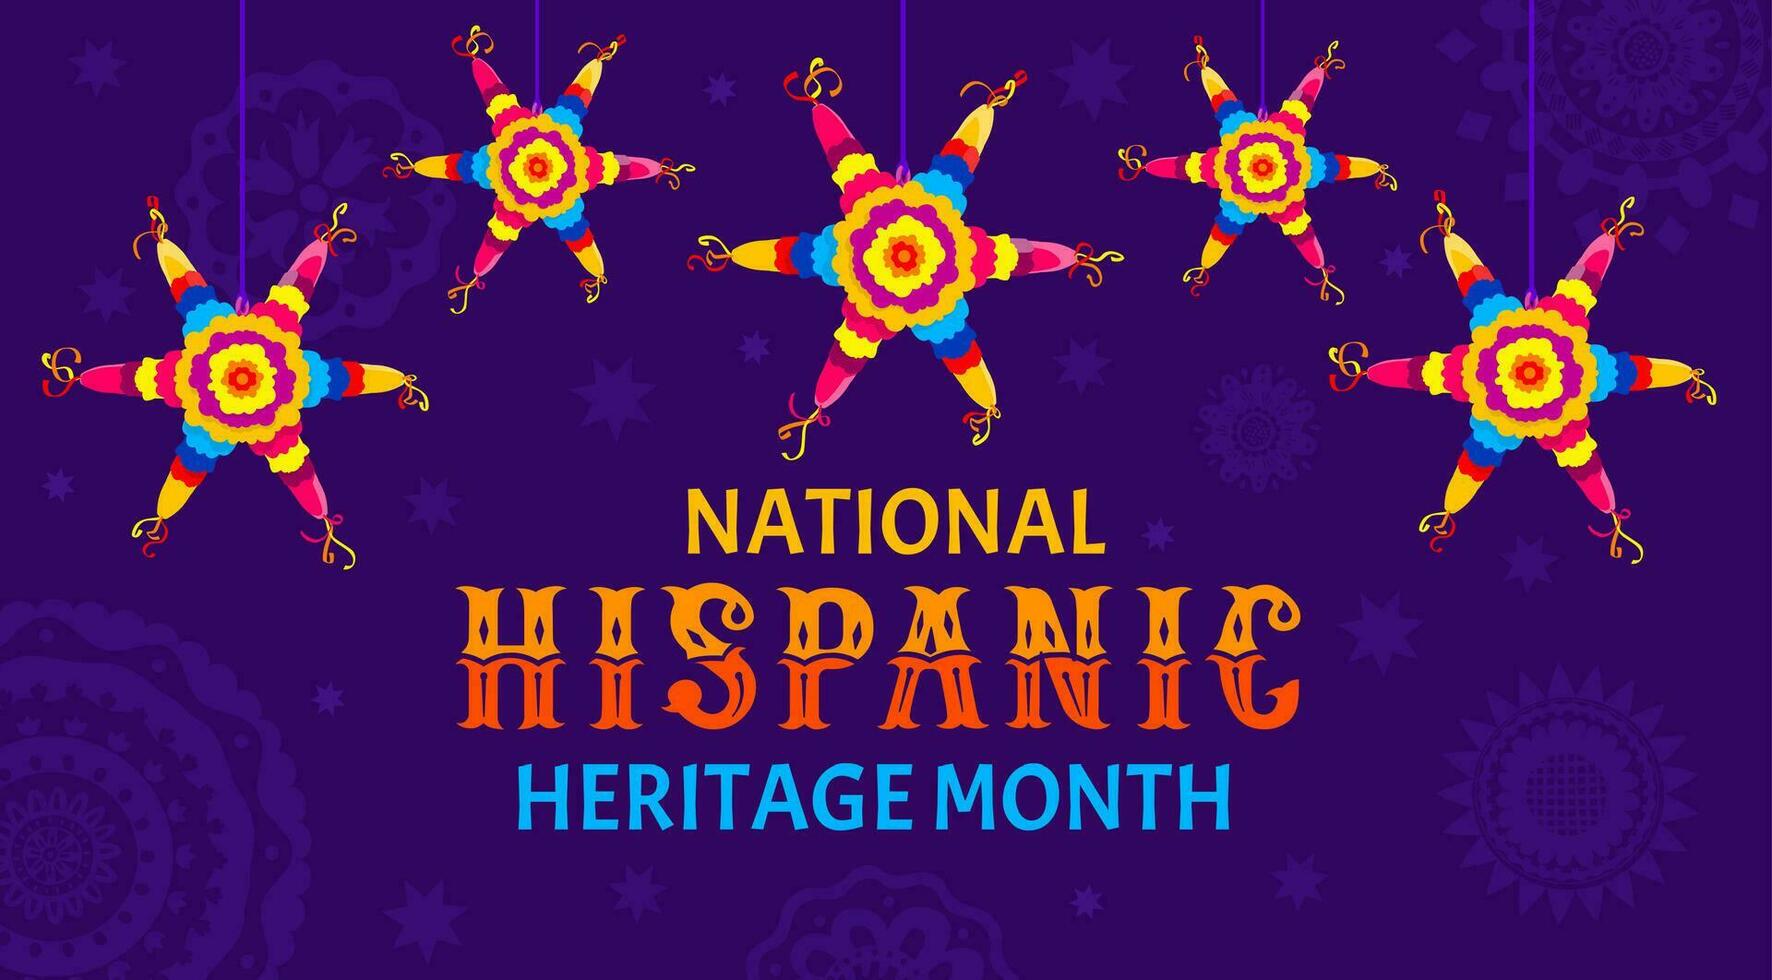 Hispanic heritage month banner with pinata stars vector